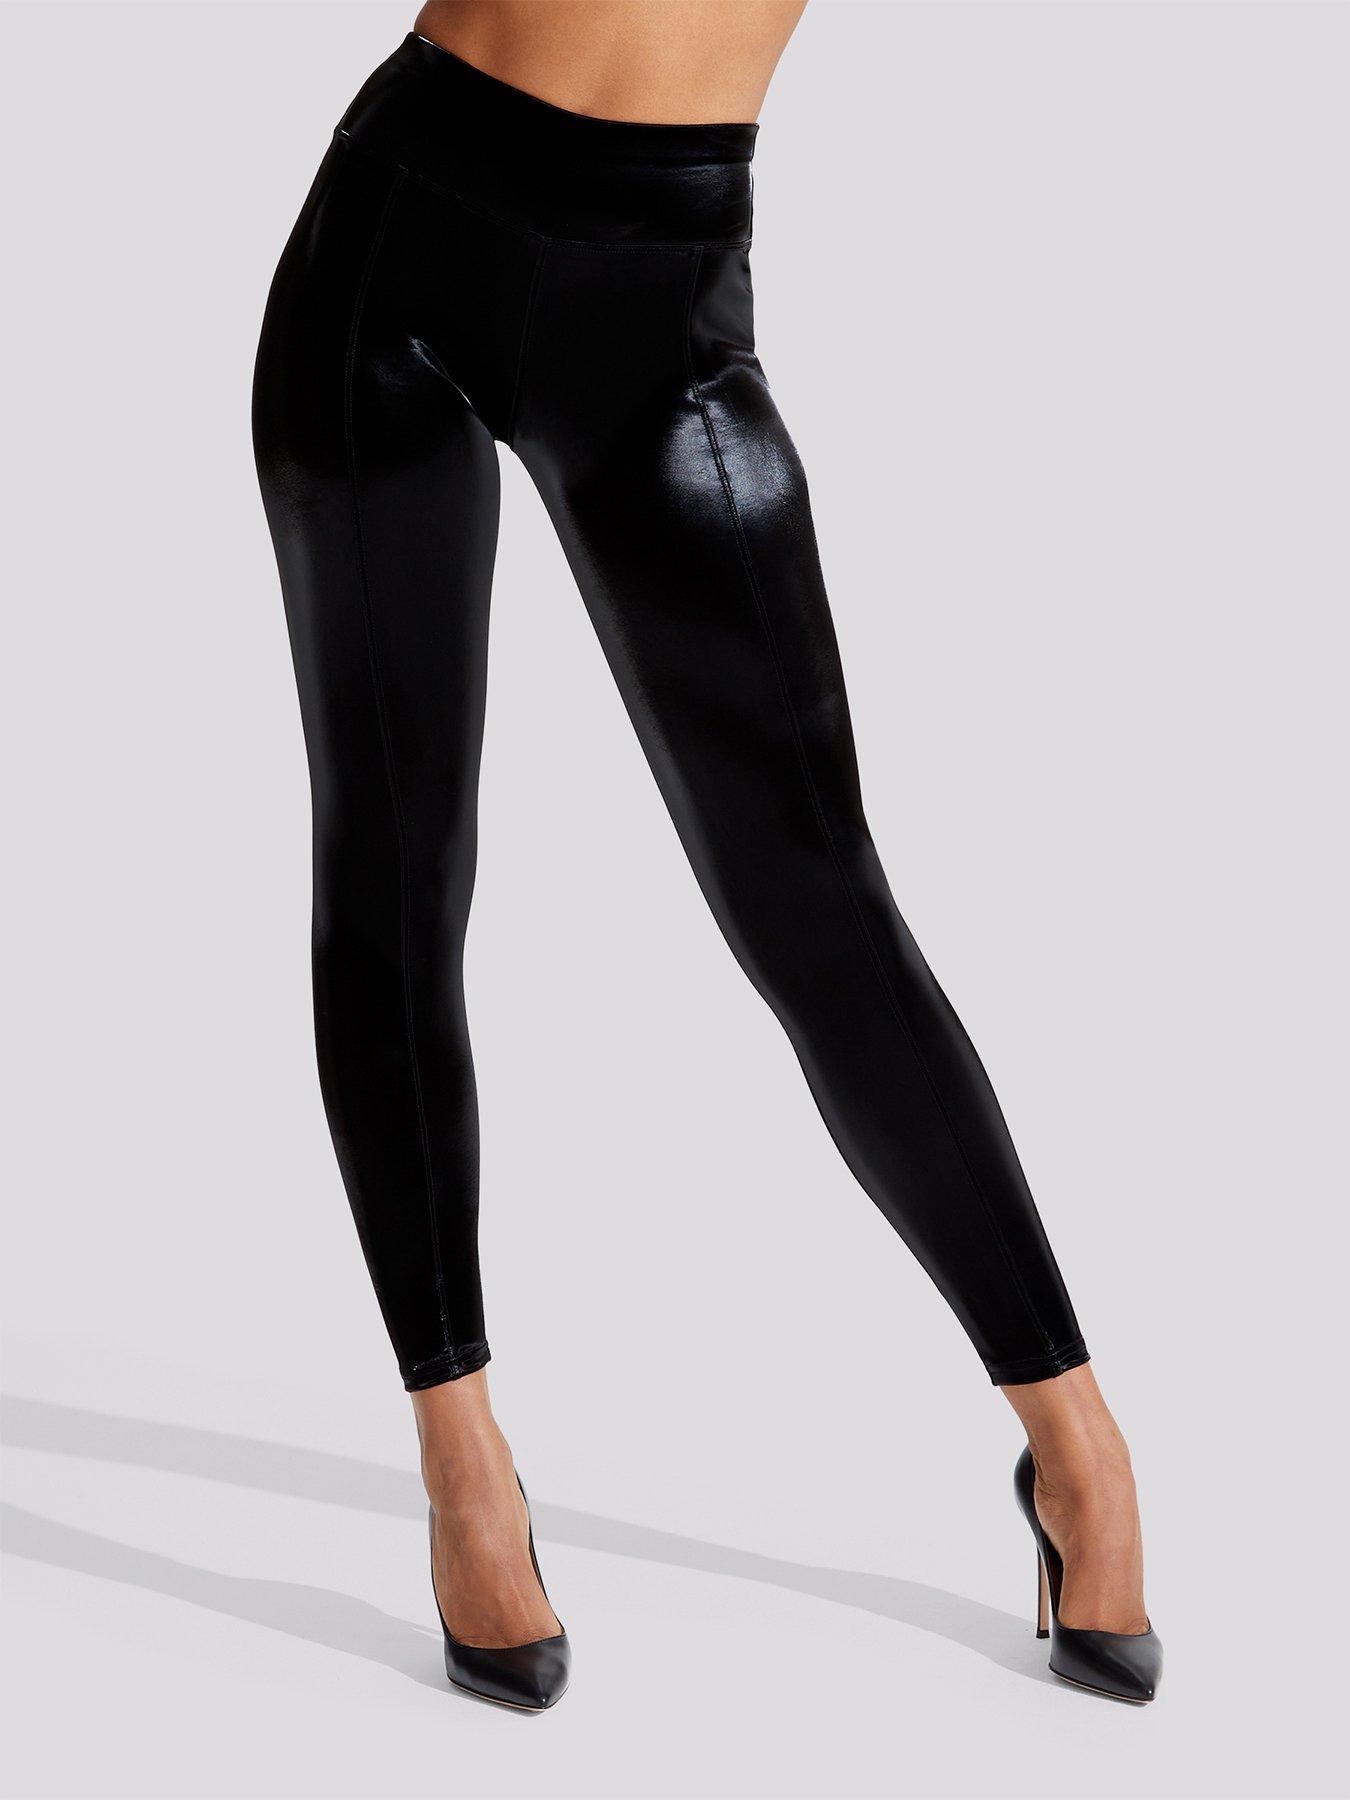 Ann Summers Bodywear Apparel The PU Seamed Leggings - Black